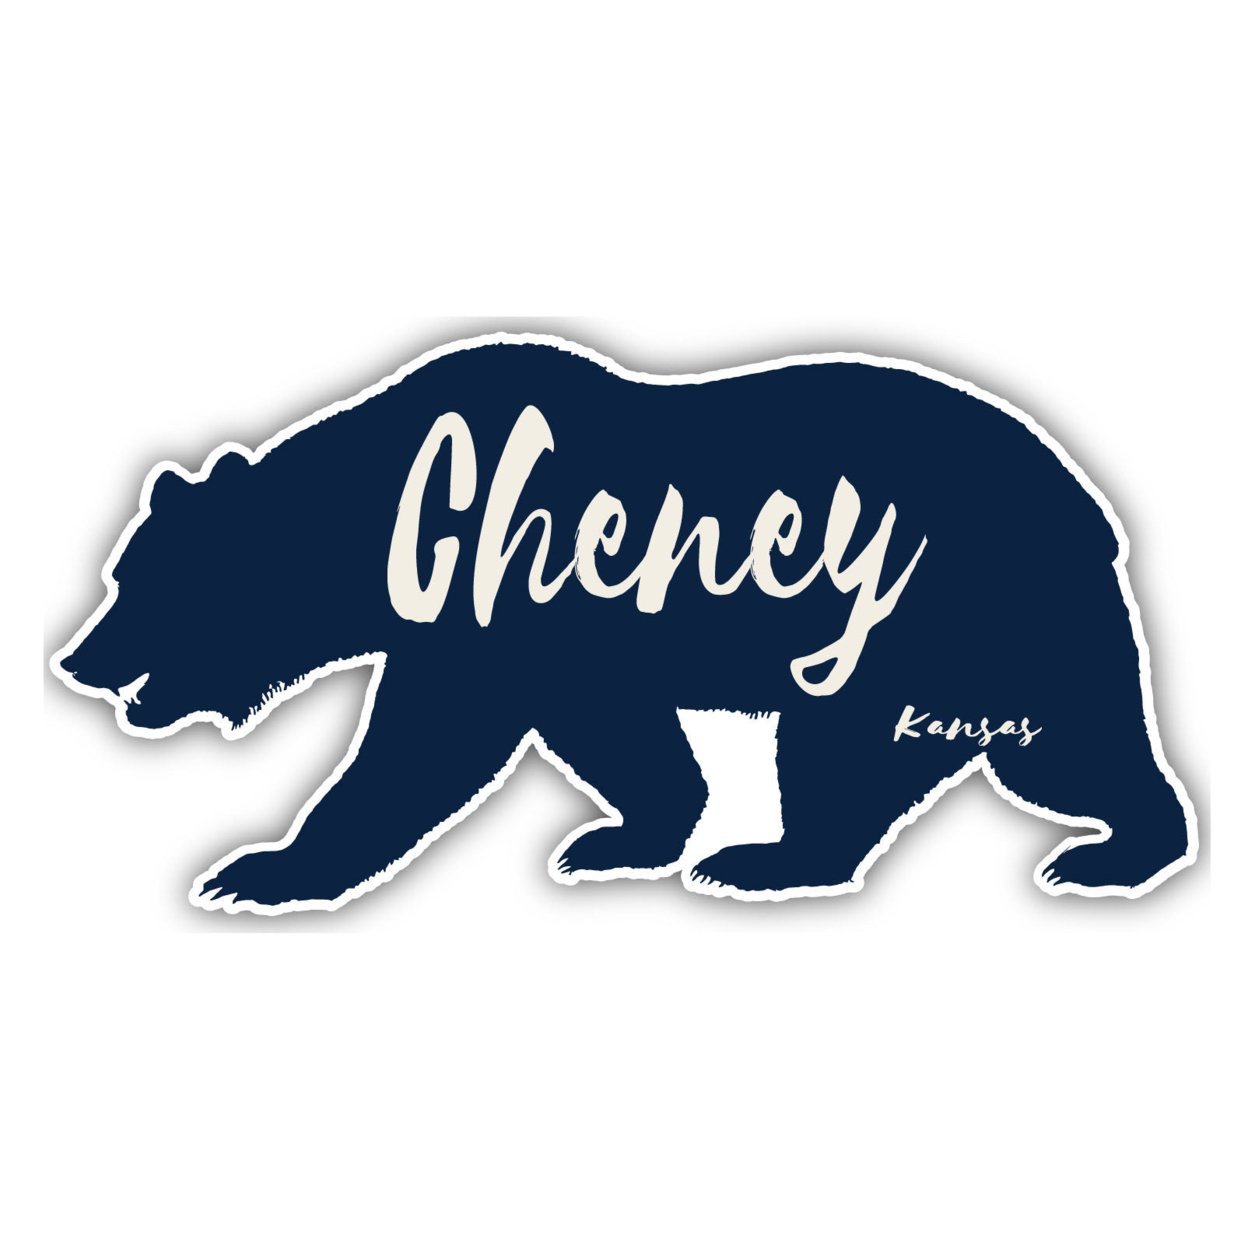 Cheney Kansas Souvenir Decorative Stickers (Choose Theme And Size) - Single Unit, 6-Inch, Bear